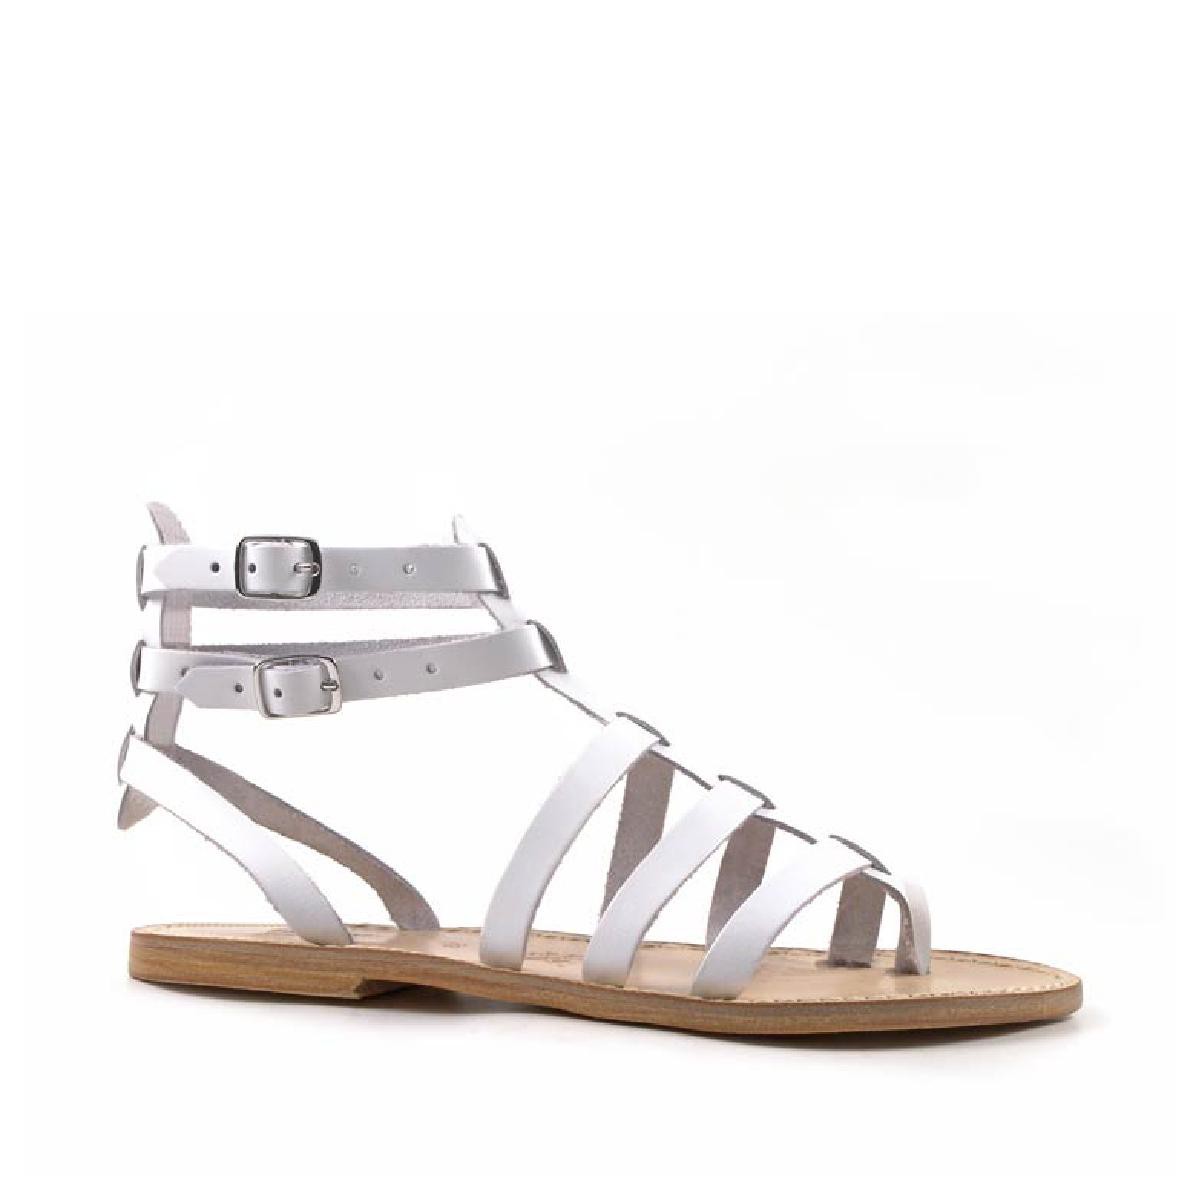 White gladiator sandals for ladies 